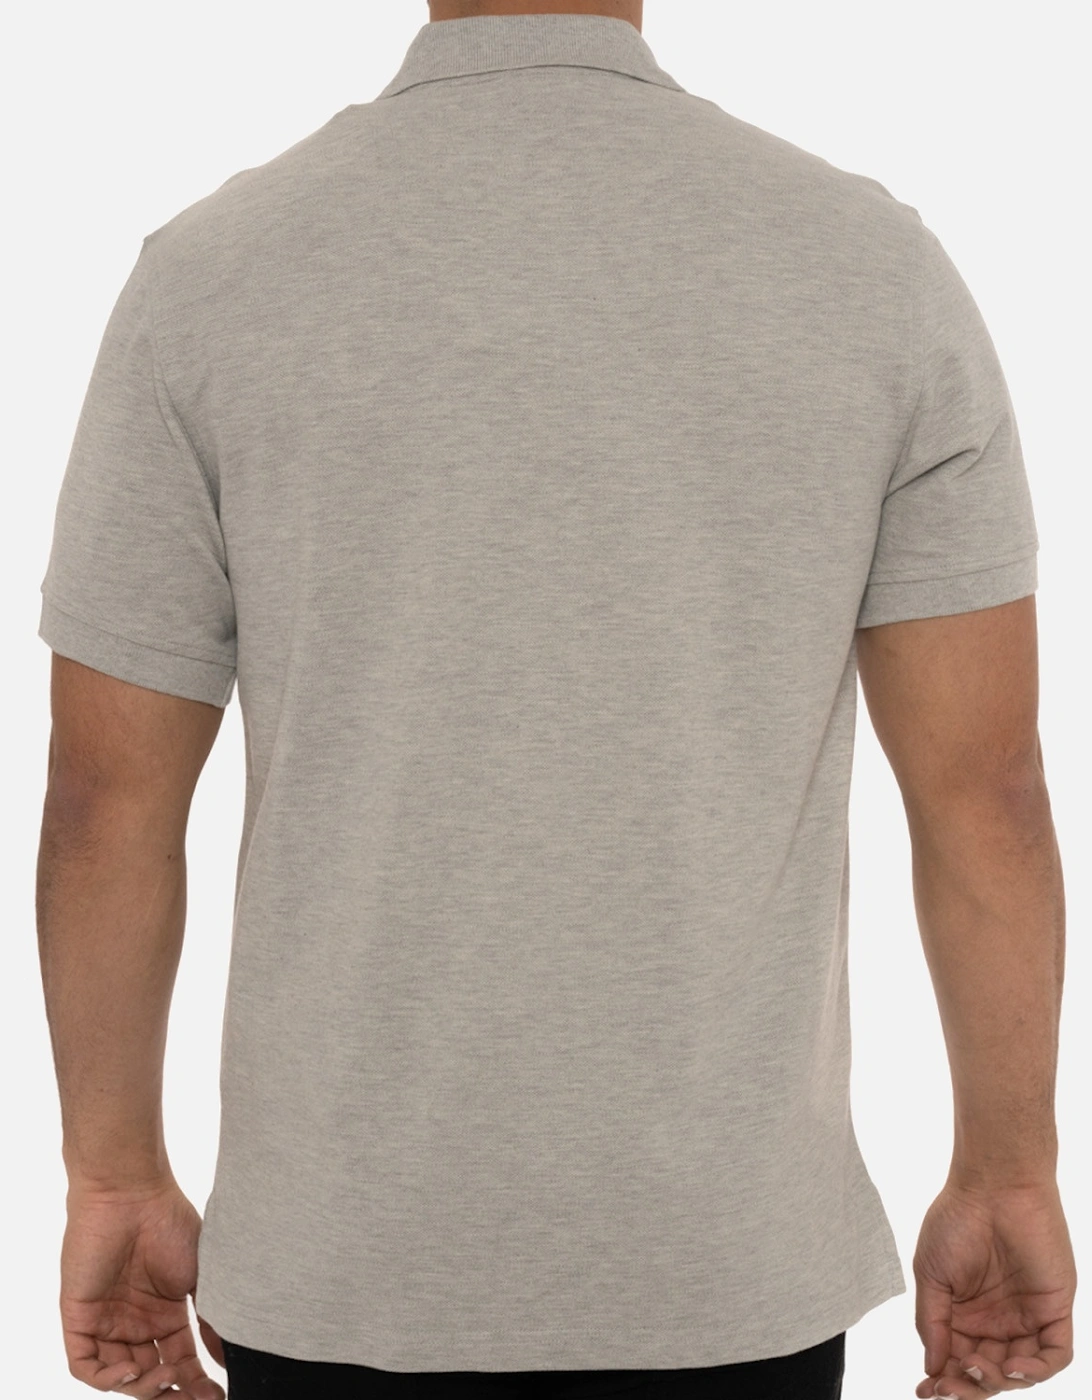 Mens Short Sleeve Polo Shirt (Grey)